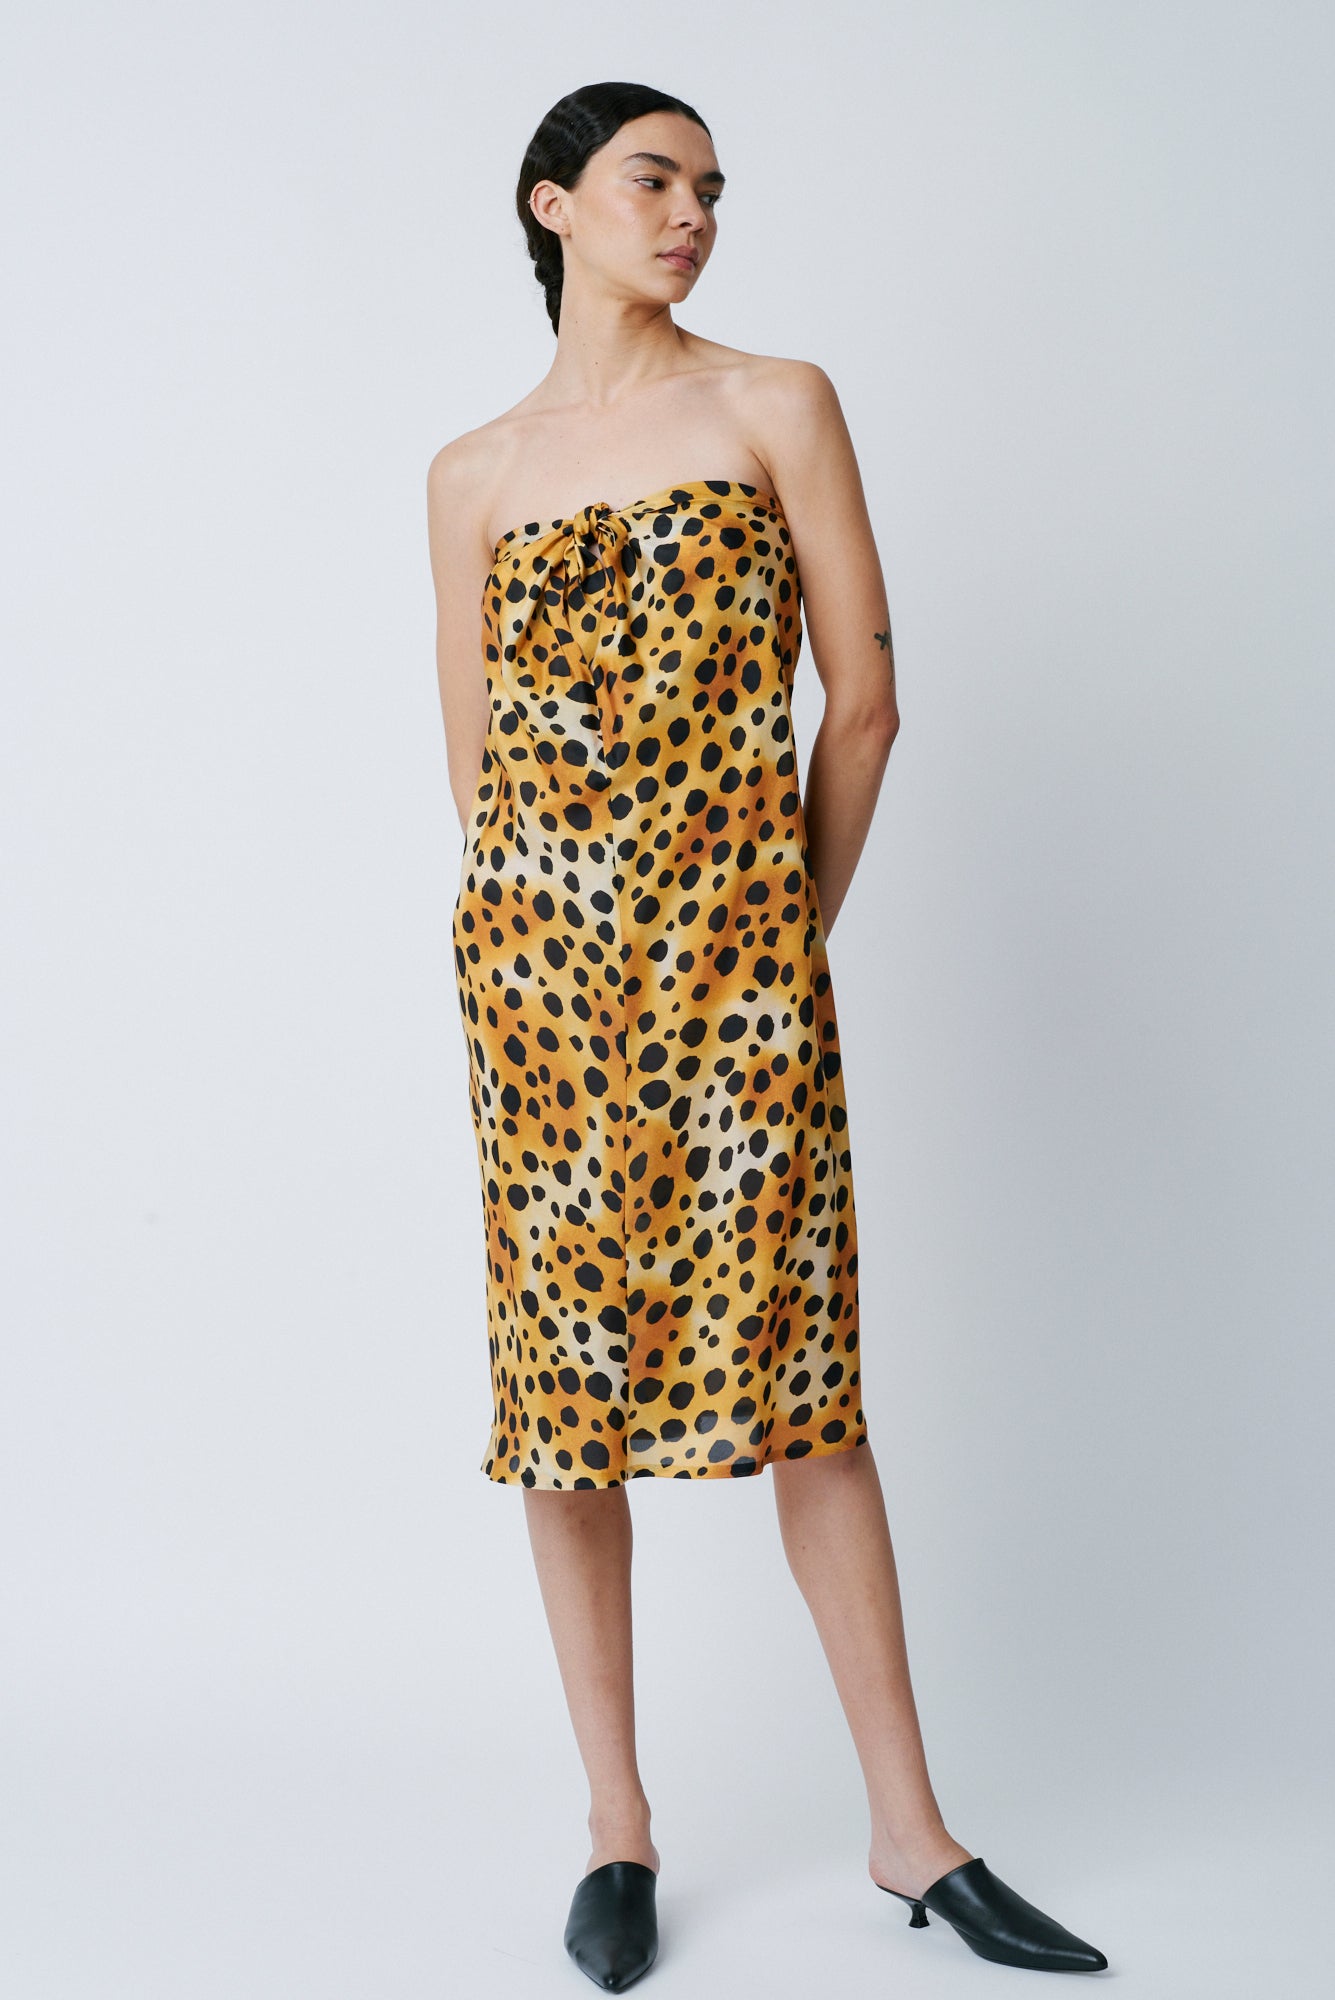 Classic Cheetah Vintage Wash Print Silk Draped Tie Dress Full Front View